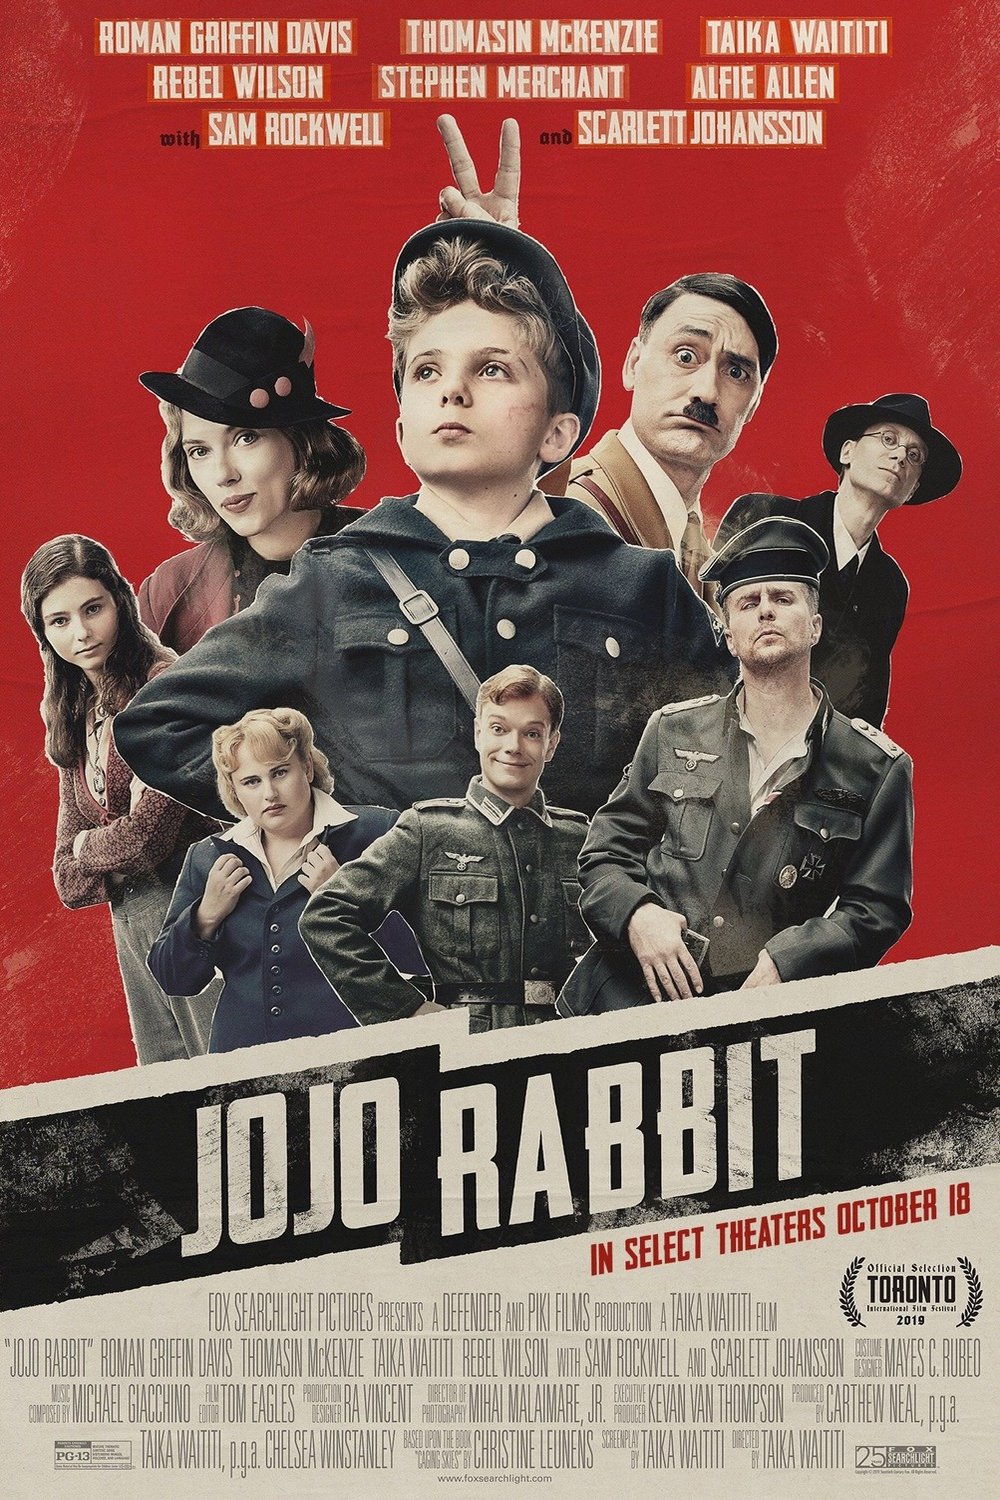 Poster of the movie Jojo Rabbit